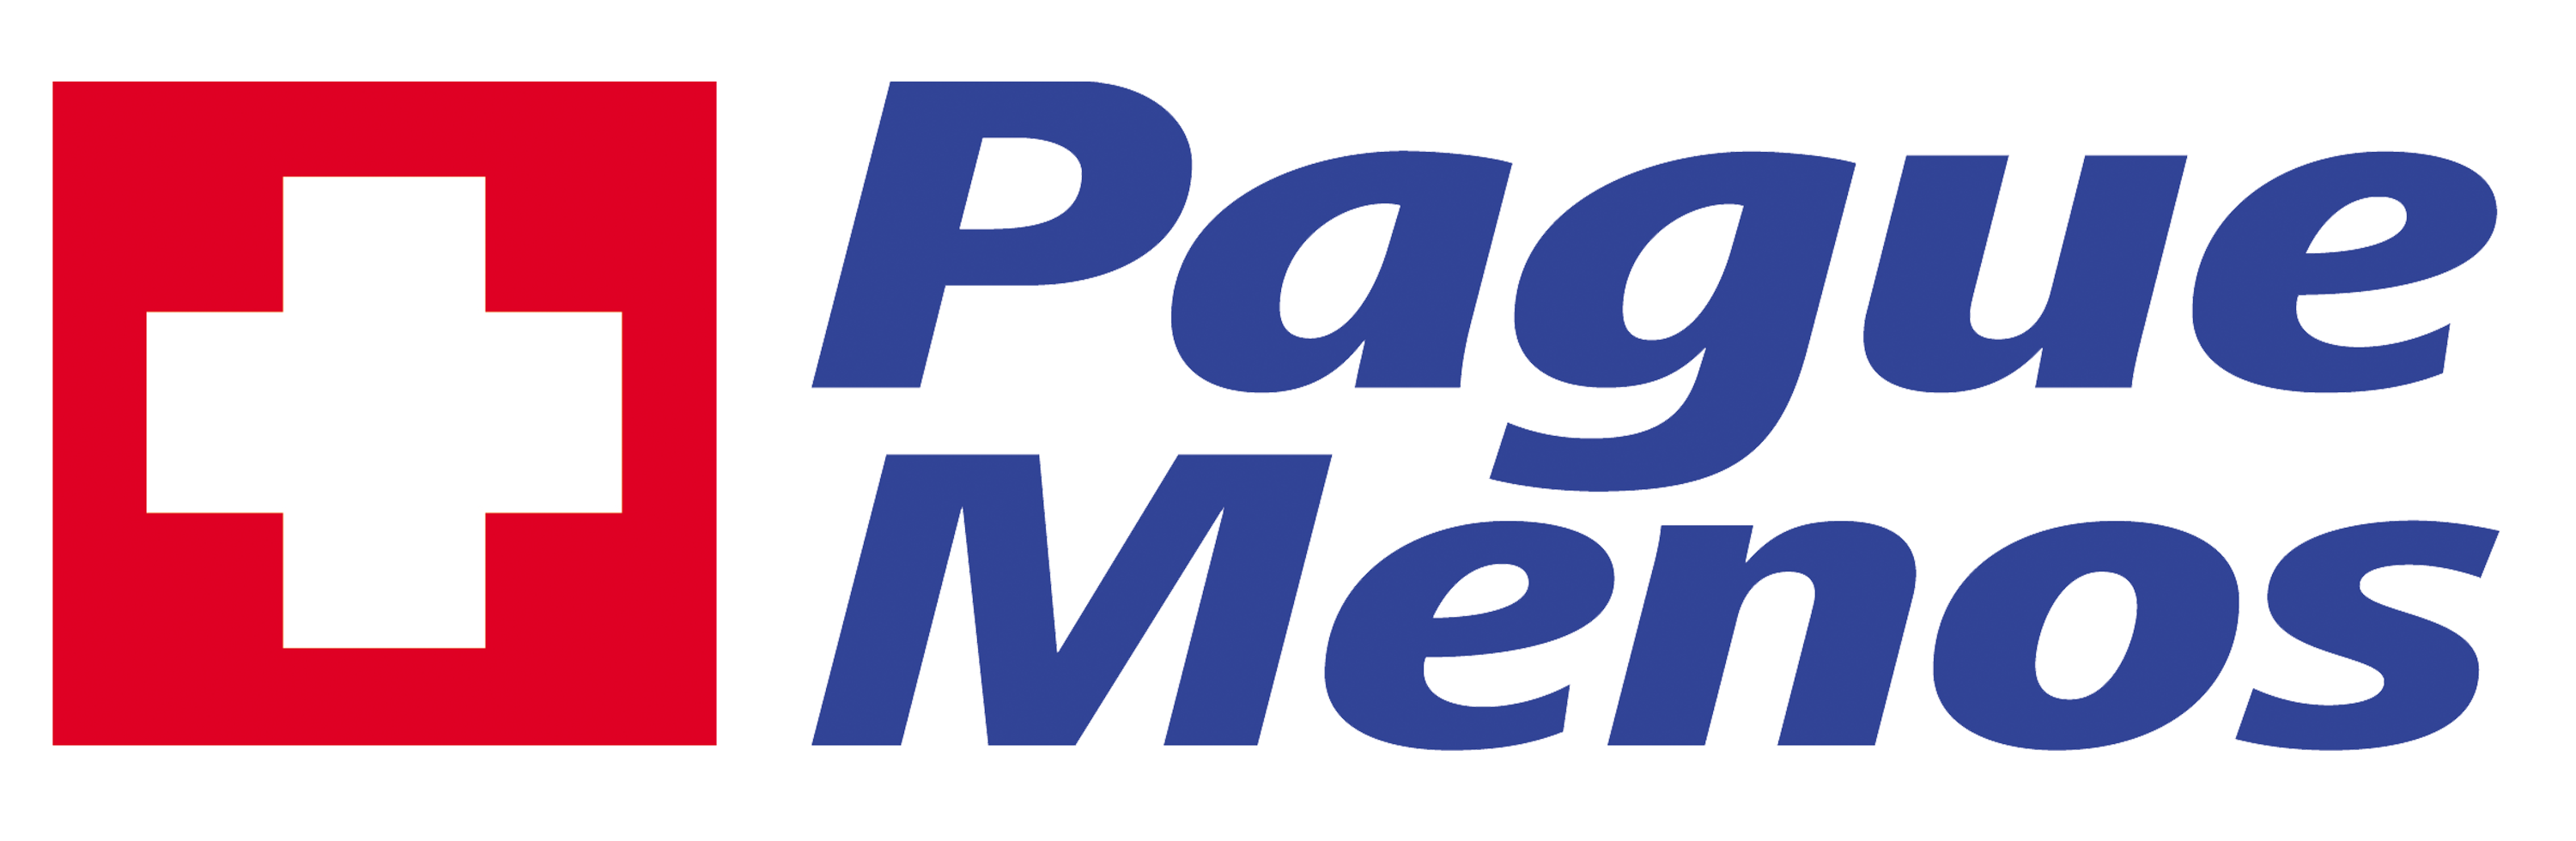 Farmacia Pague Menos - Ruada Bahia - MG